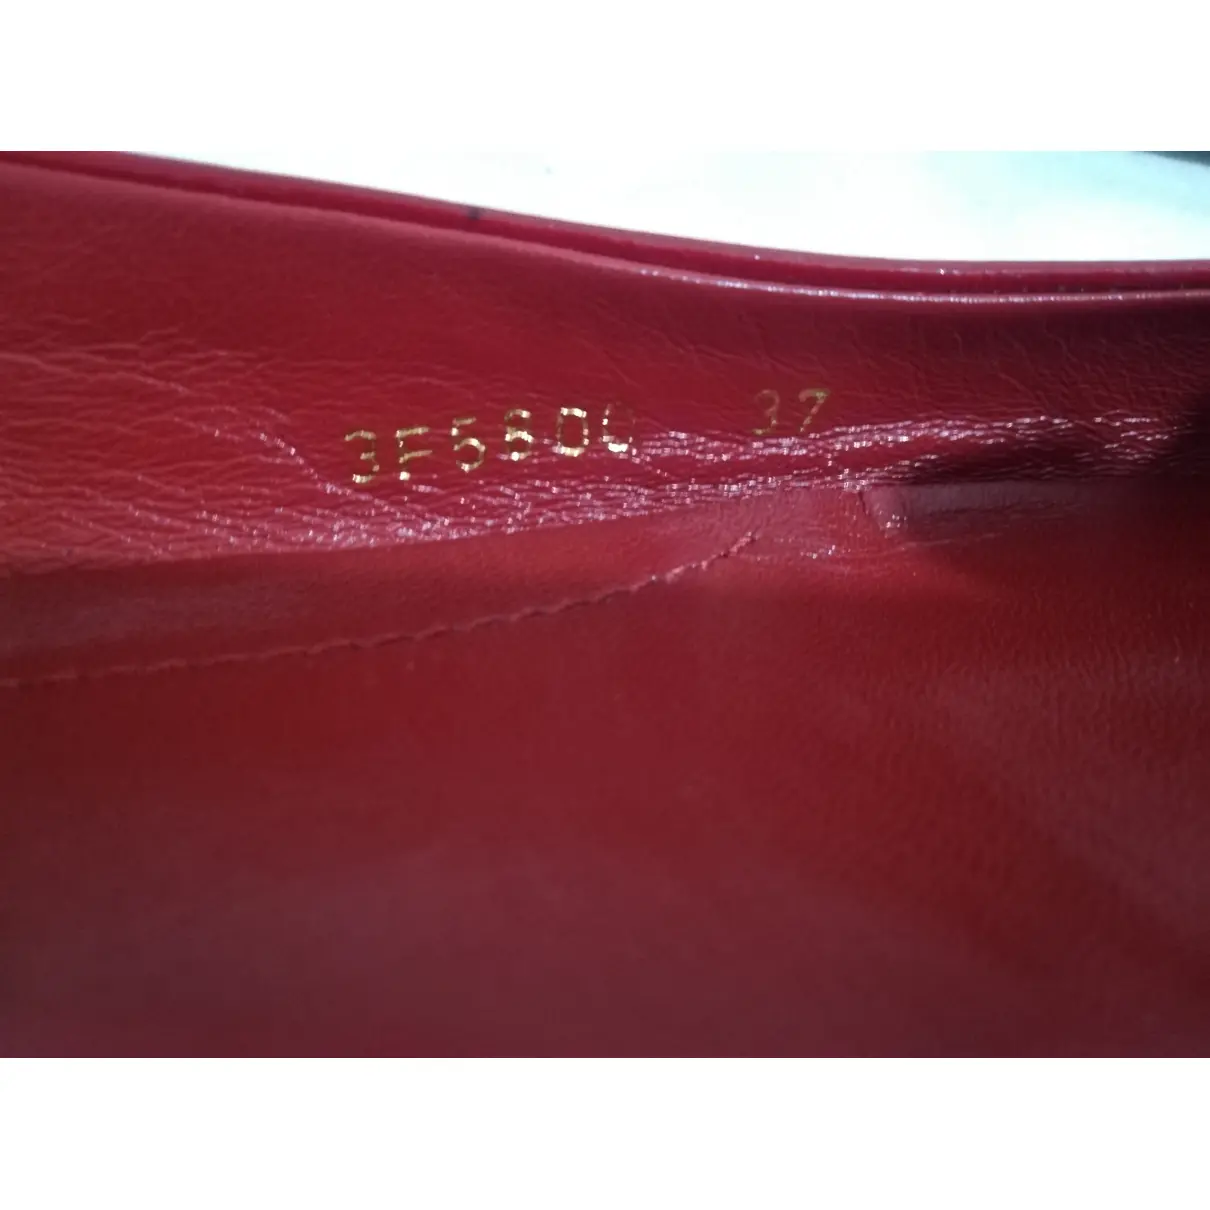 Patent leather ballet flats Prada